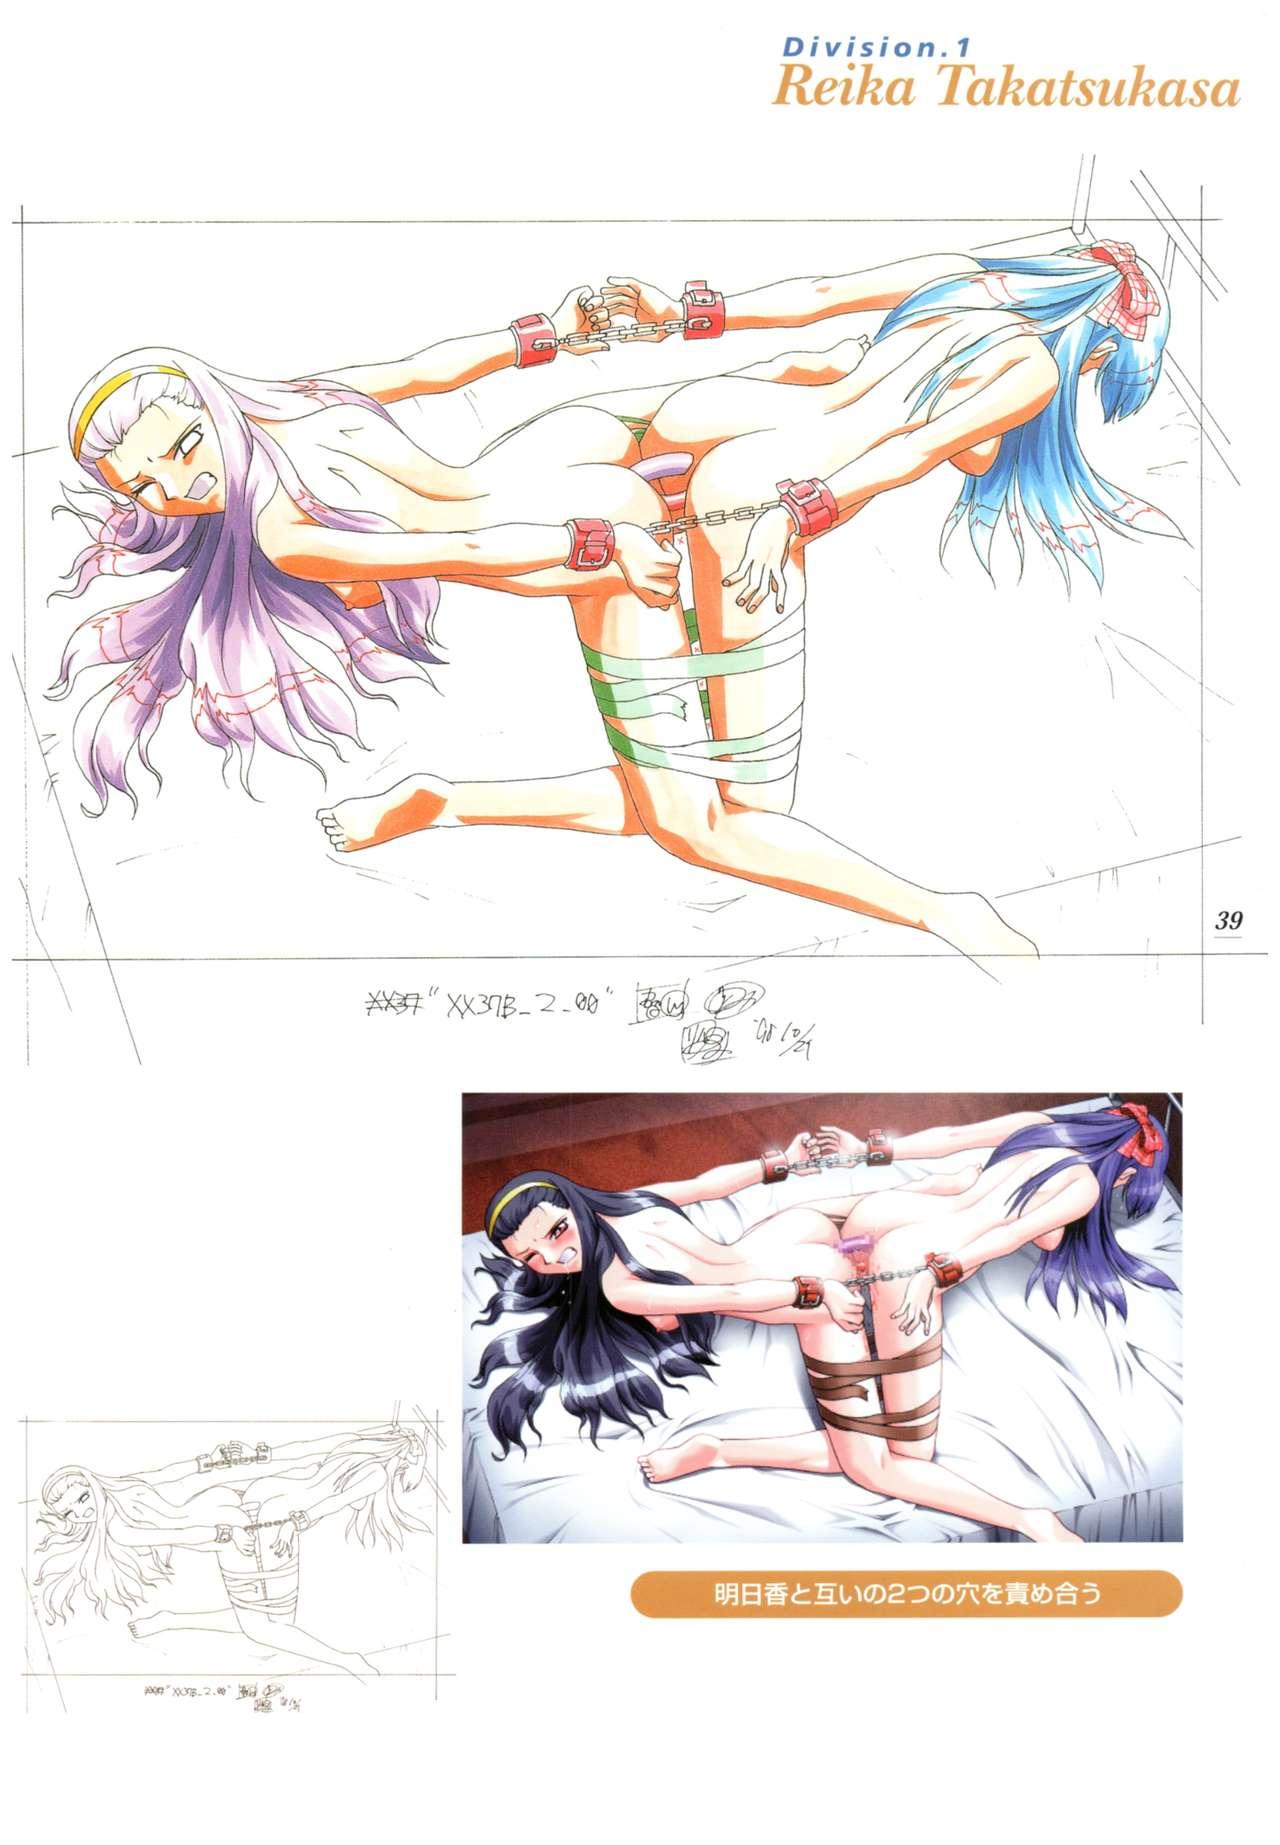 Kyouhaku Owaranai Asu original illustration art book 43